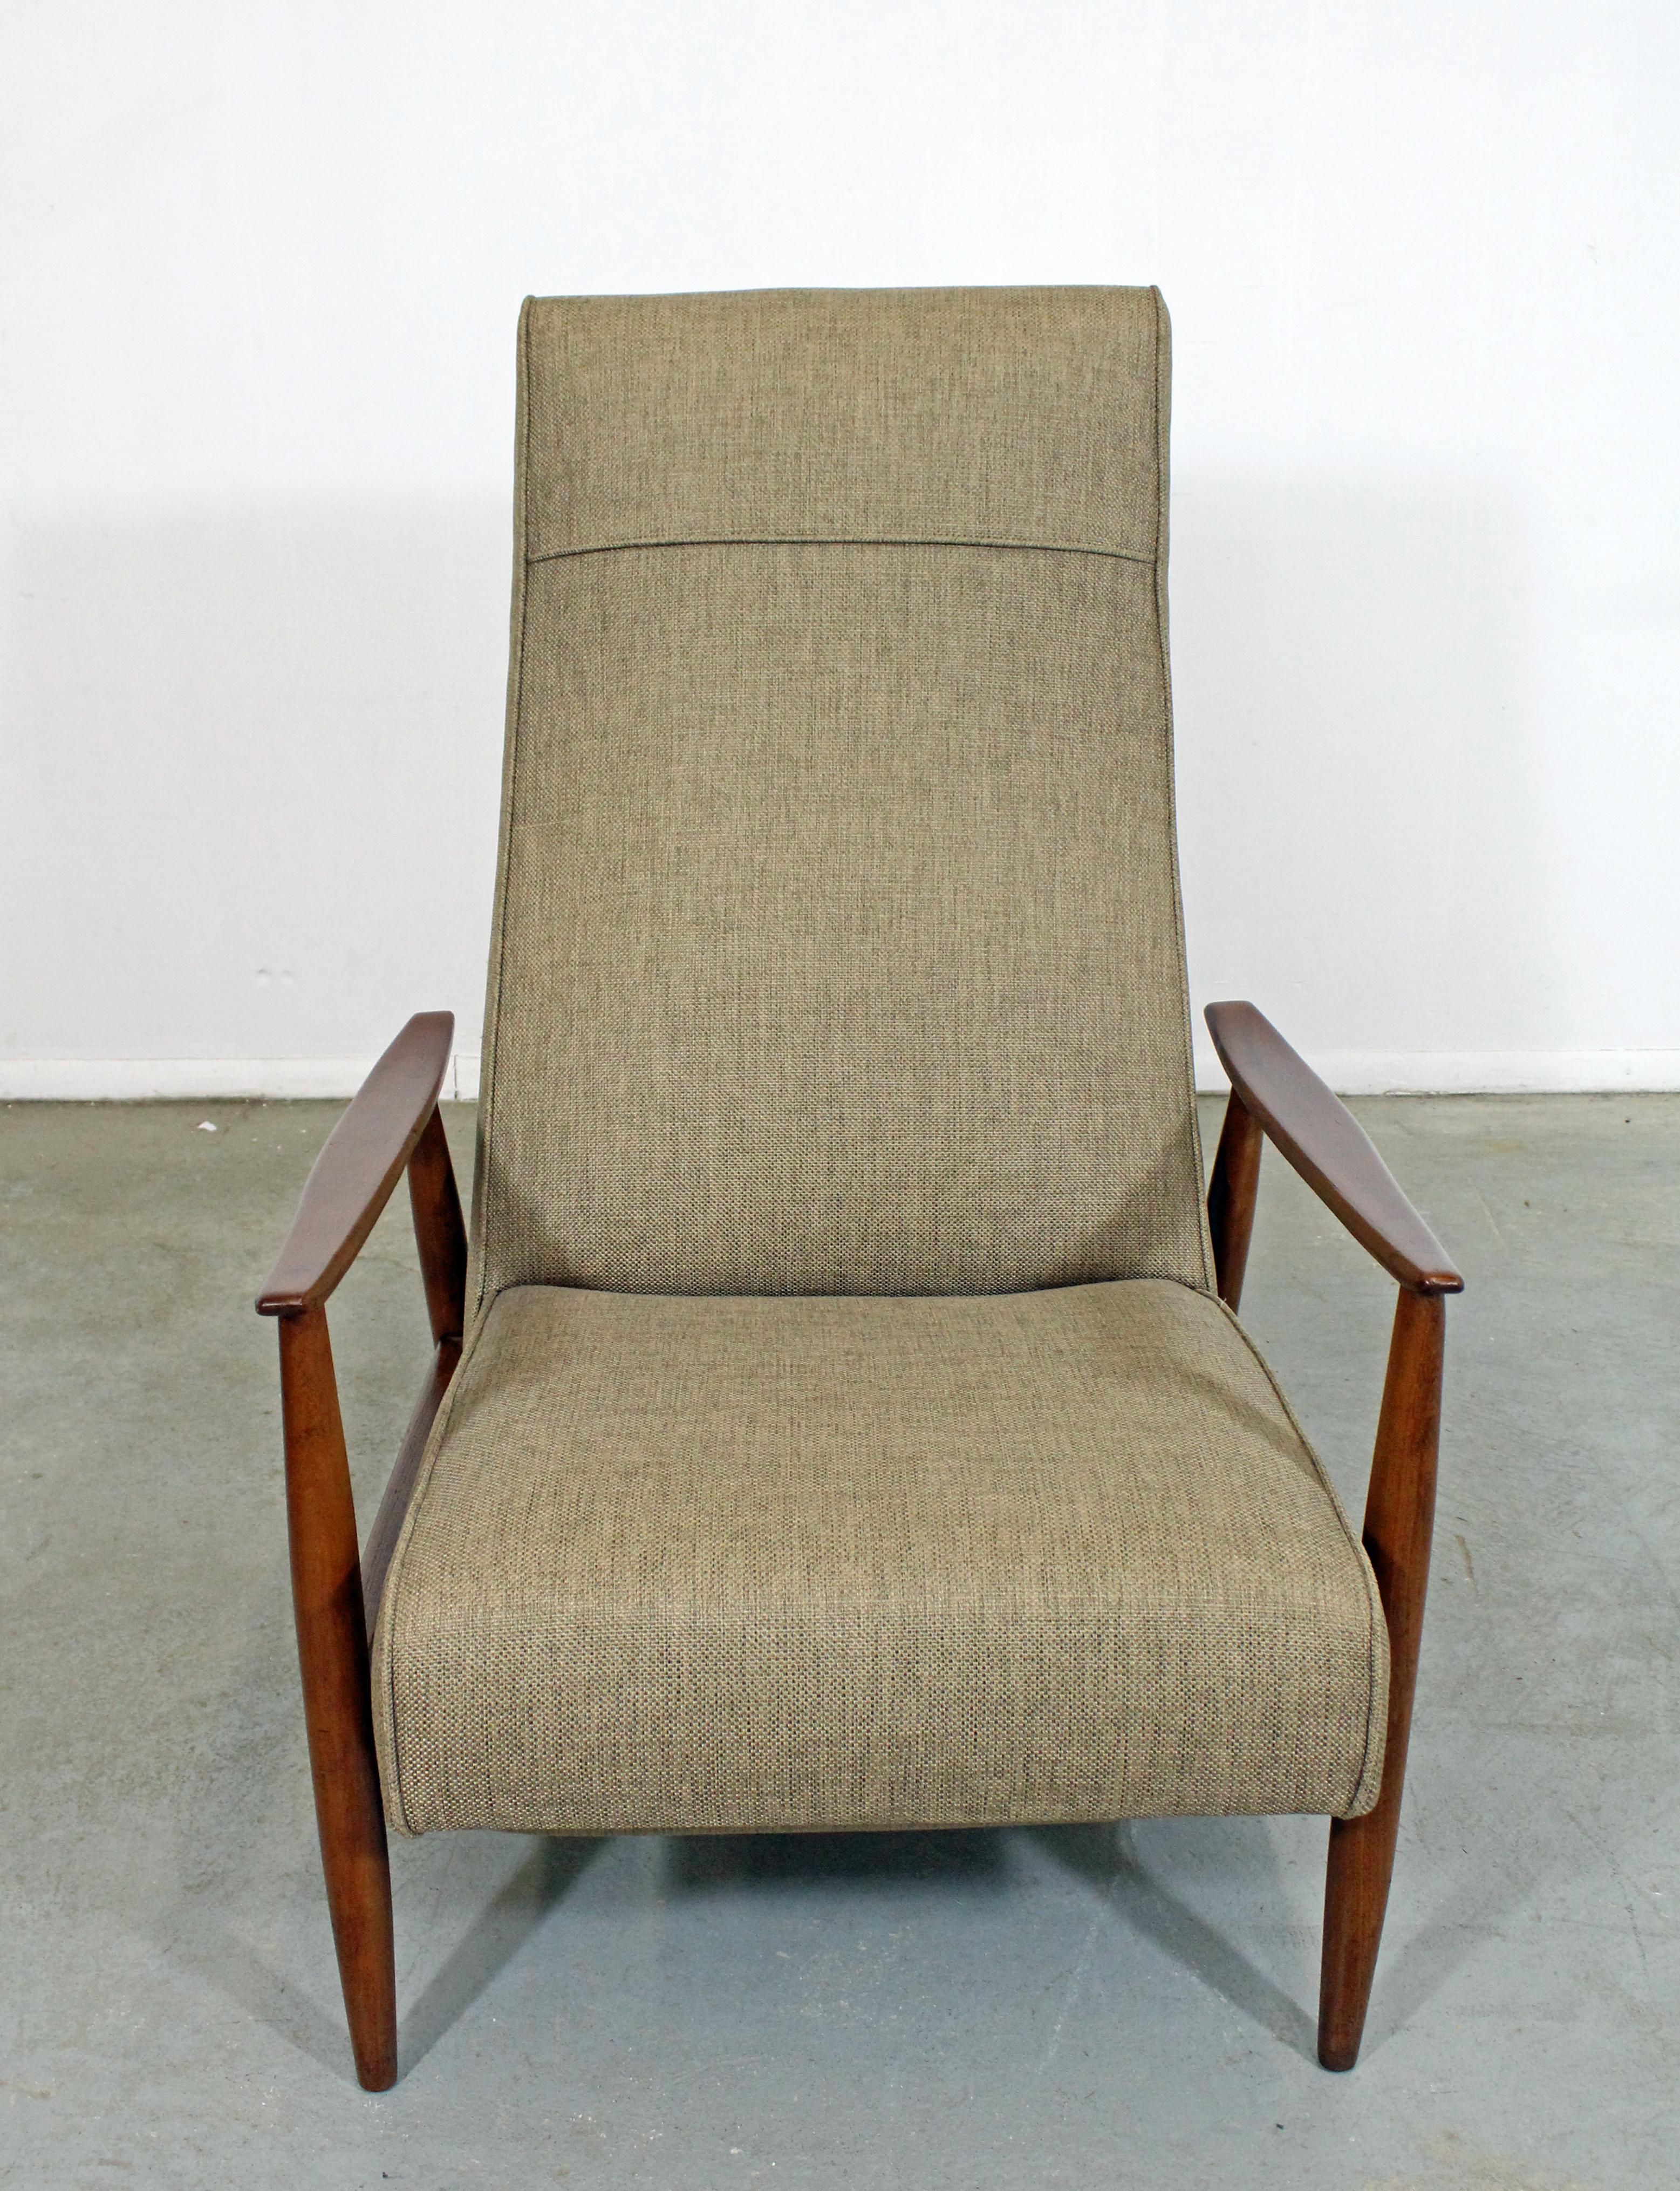 American Mid-Century Modern Milo Baughman for Thayer Coggin Recliner Lounge Chair